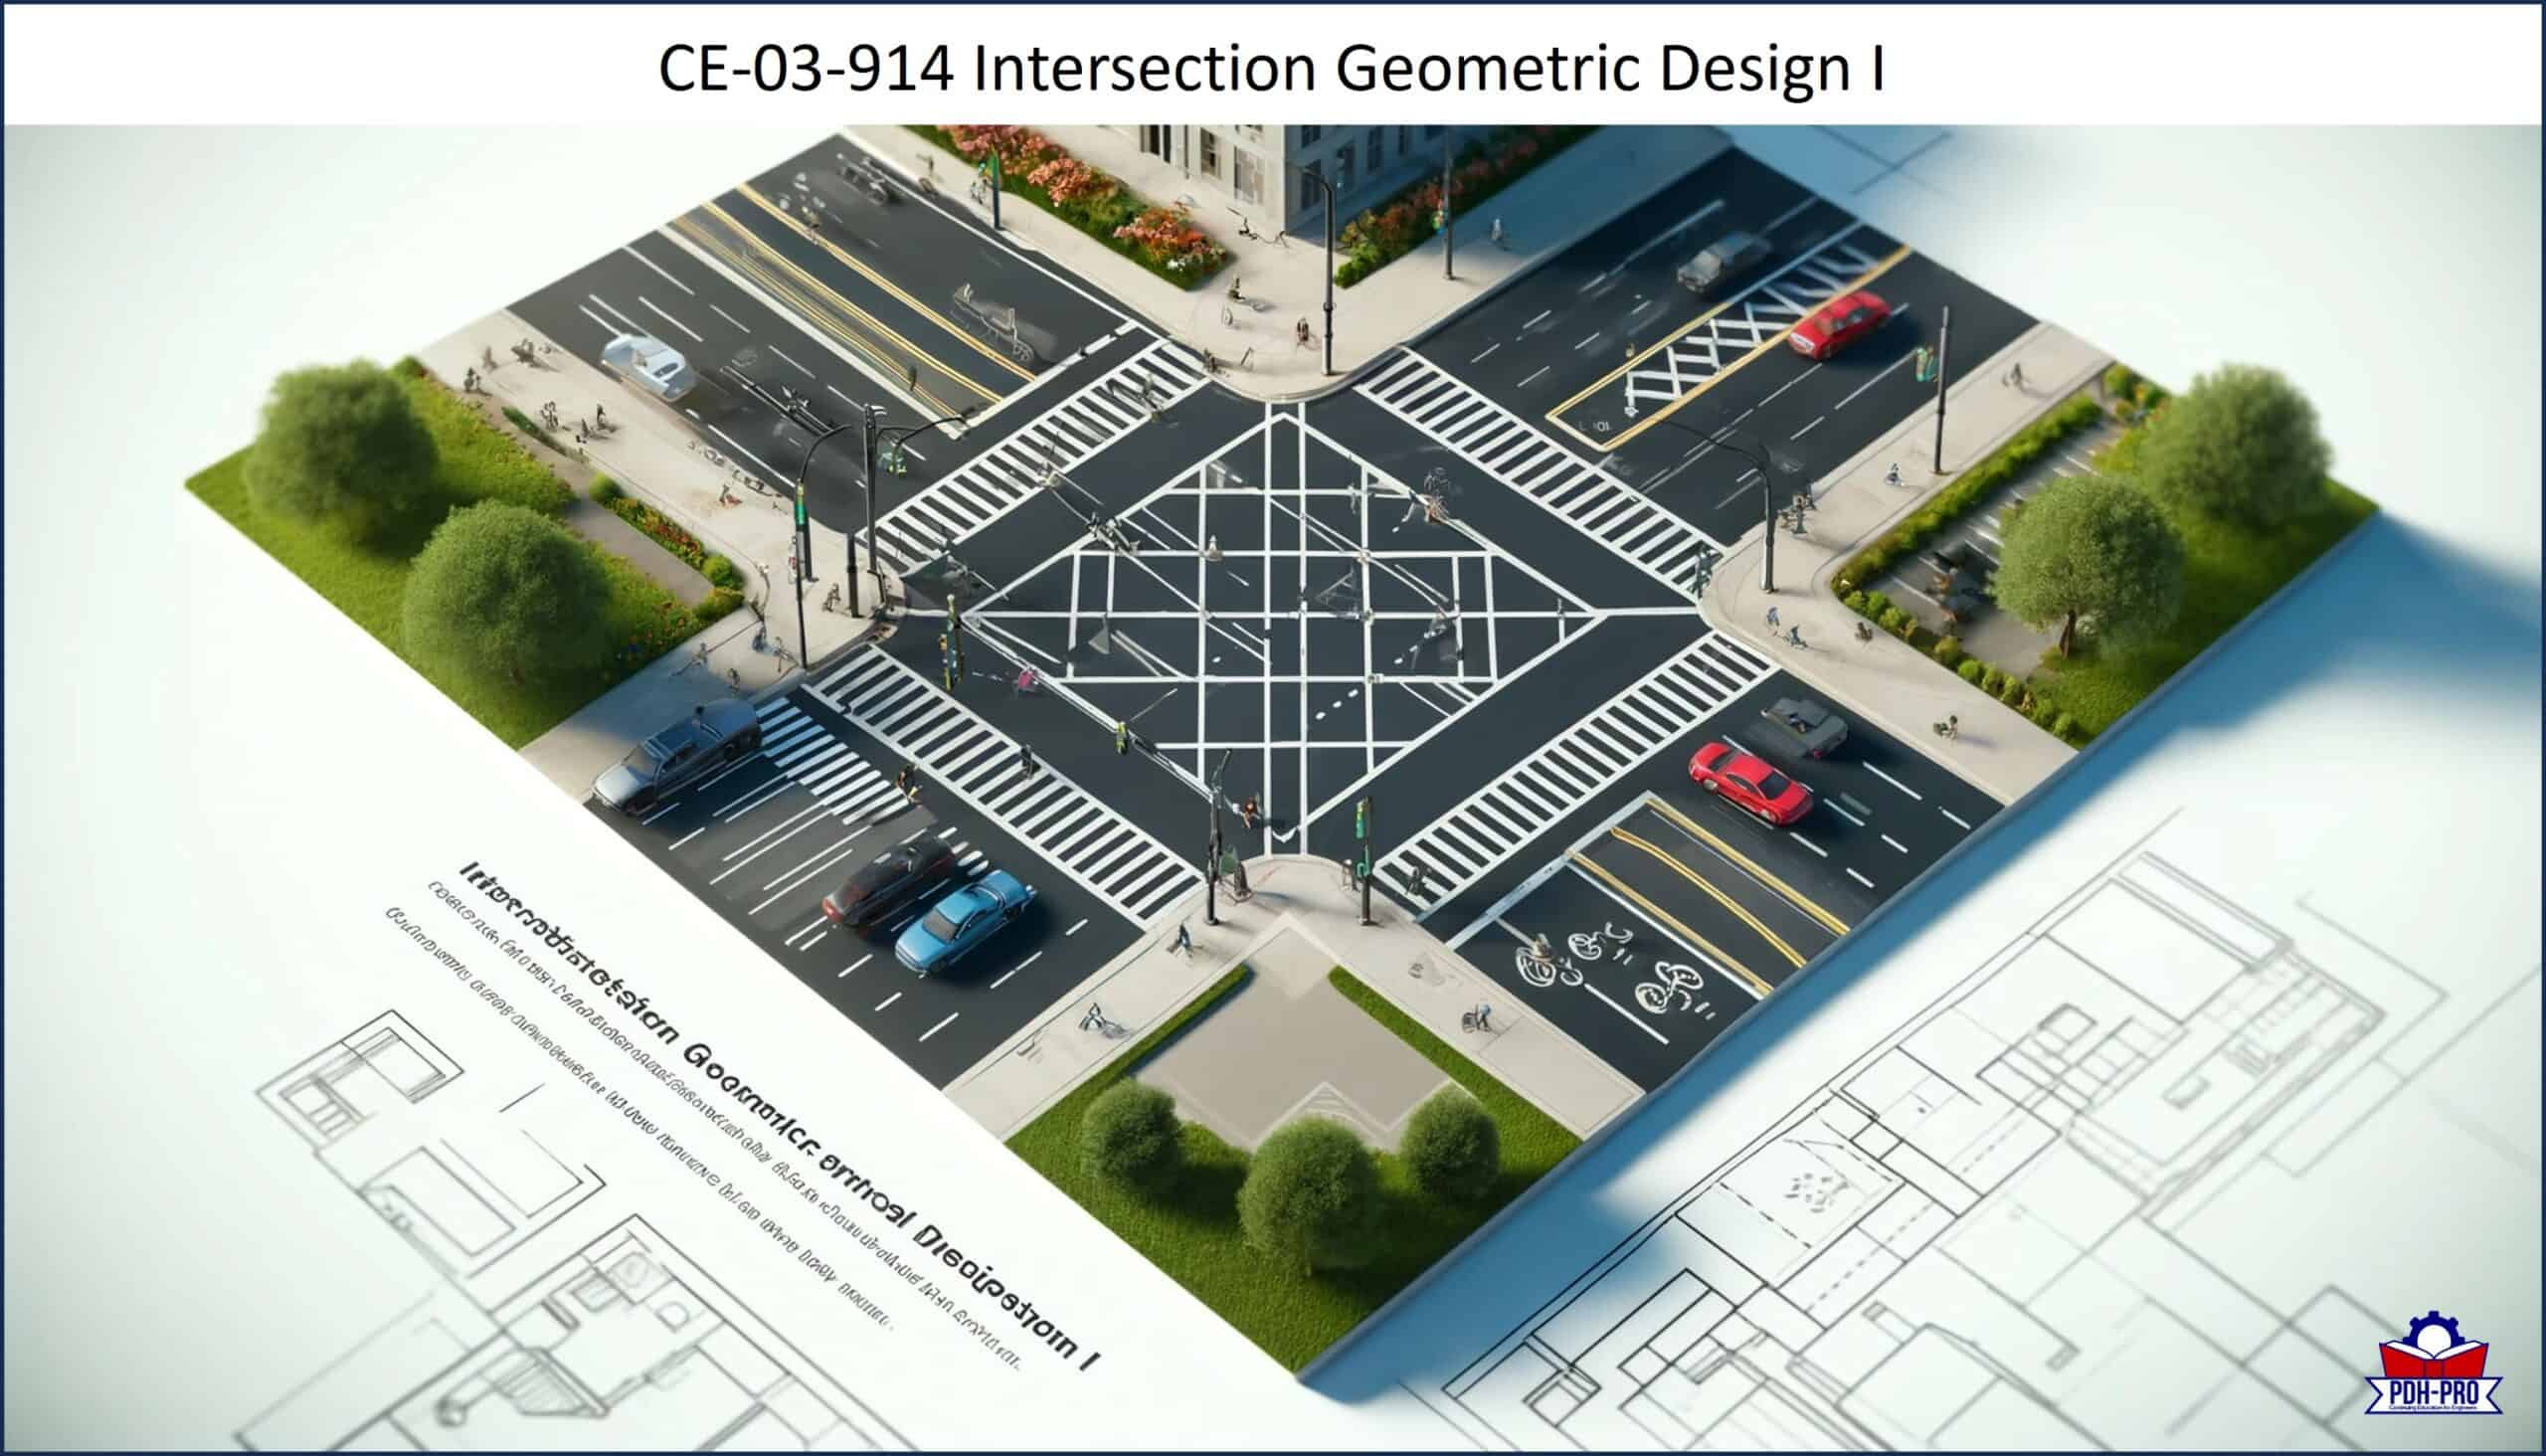 Intersection Geometric Design I